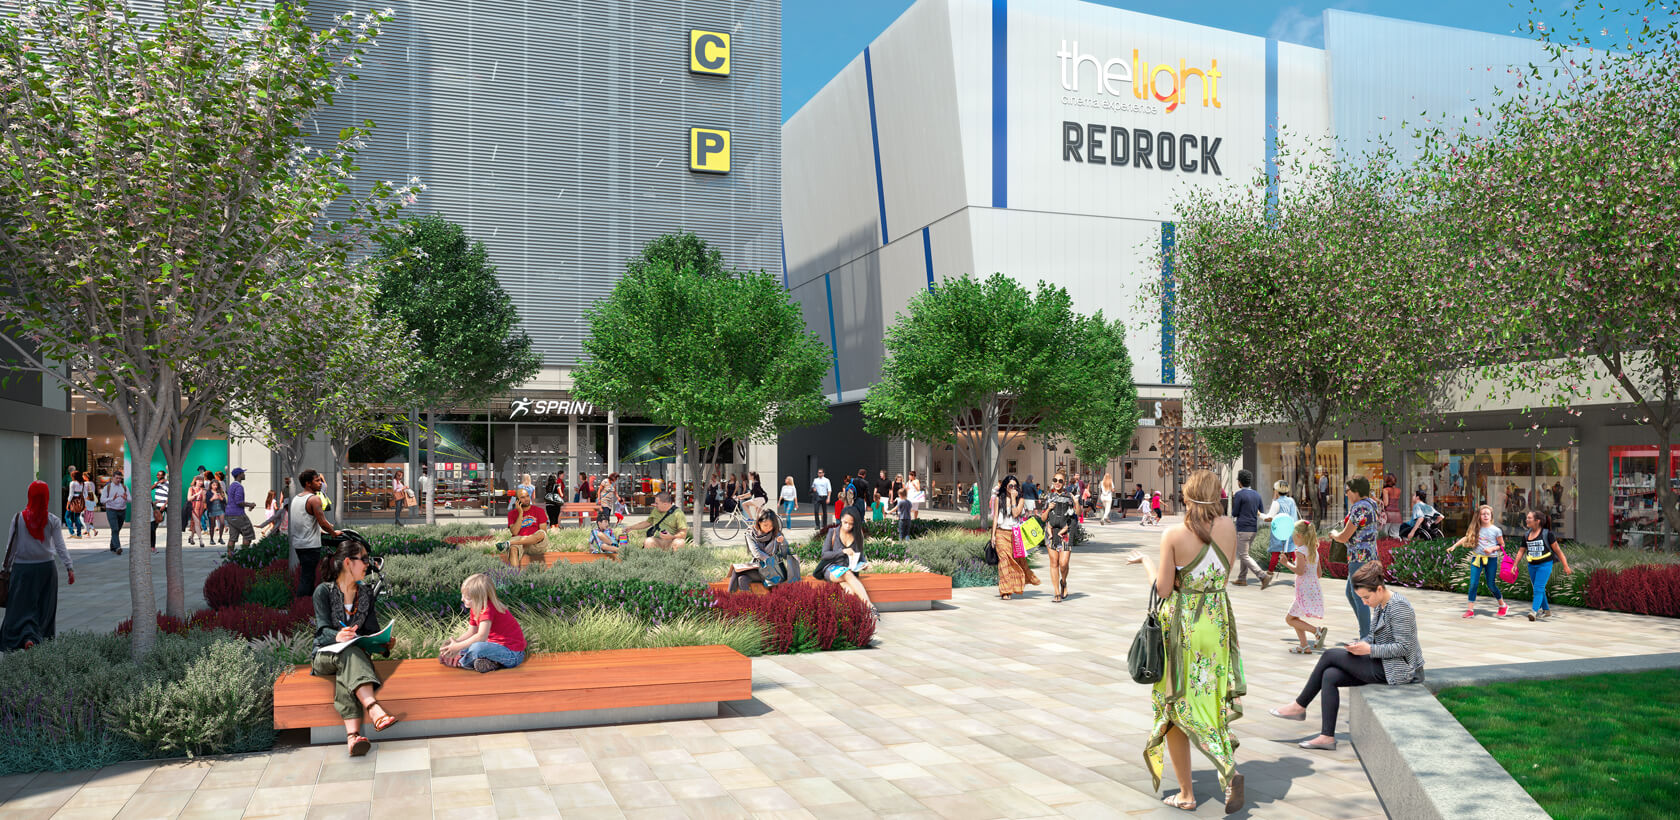 We Love Stockport New Development Redrock Development